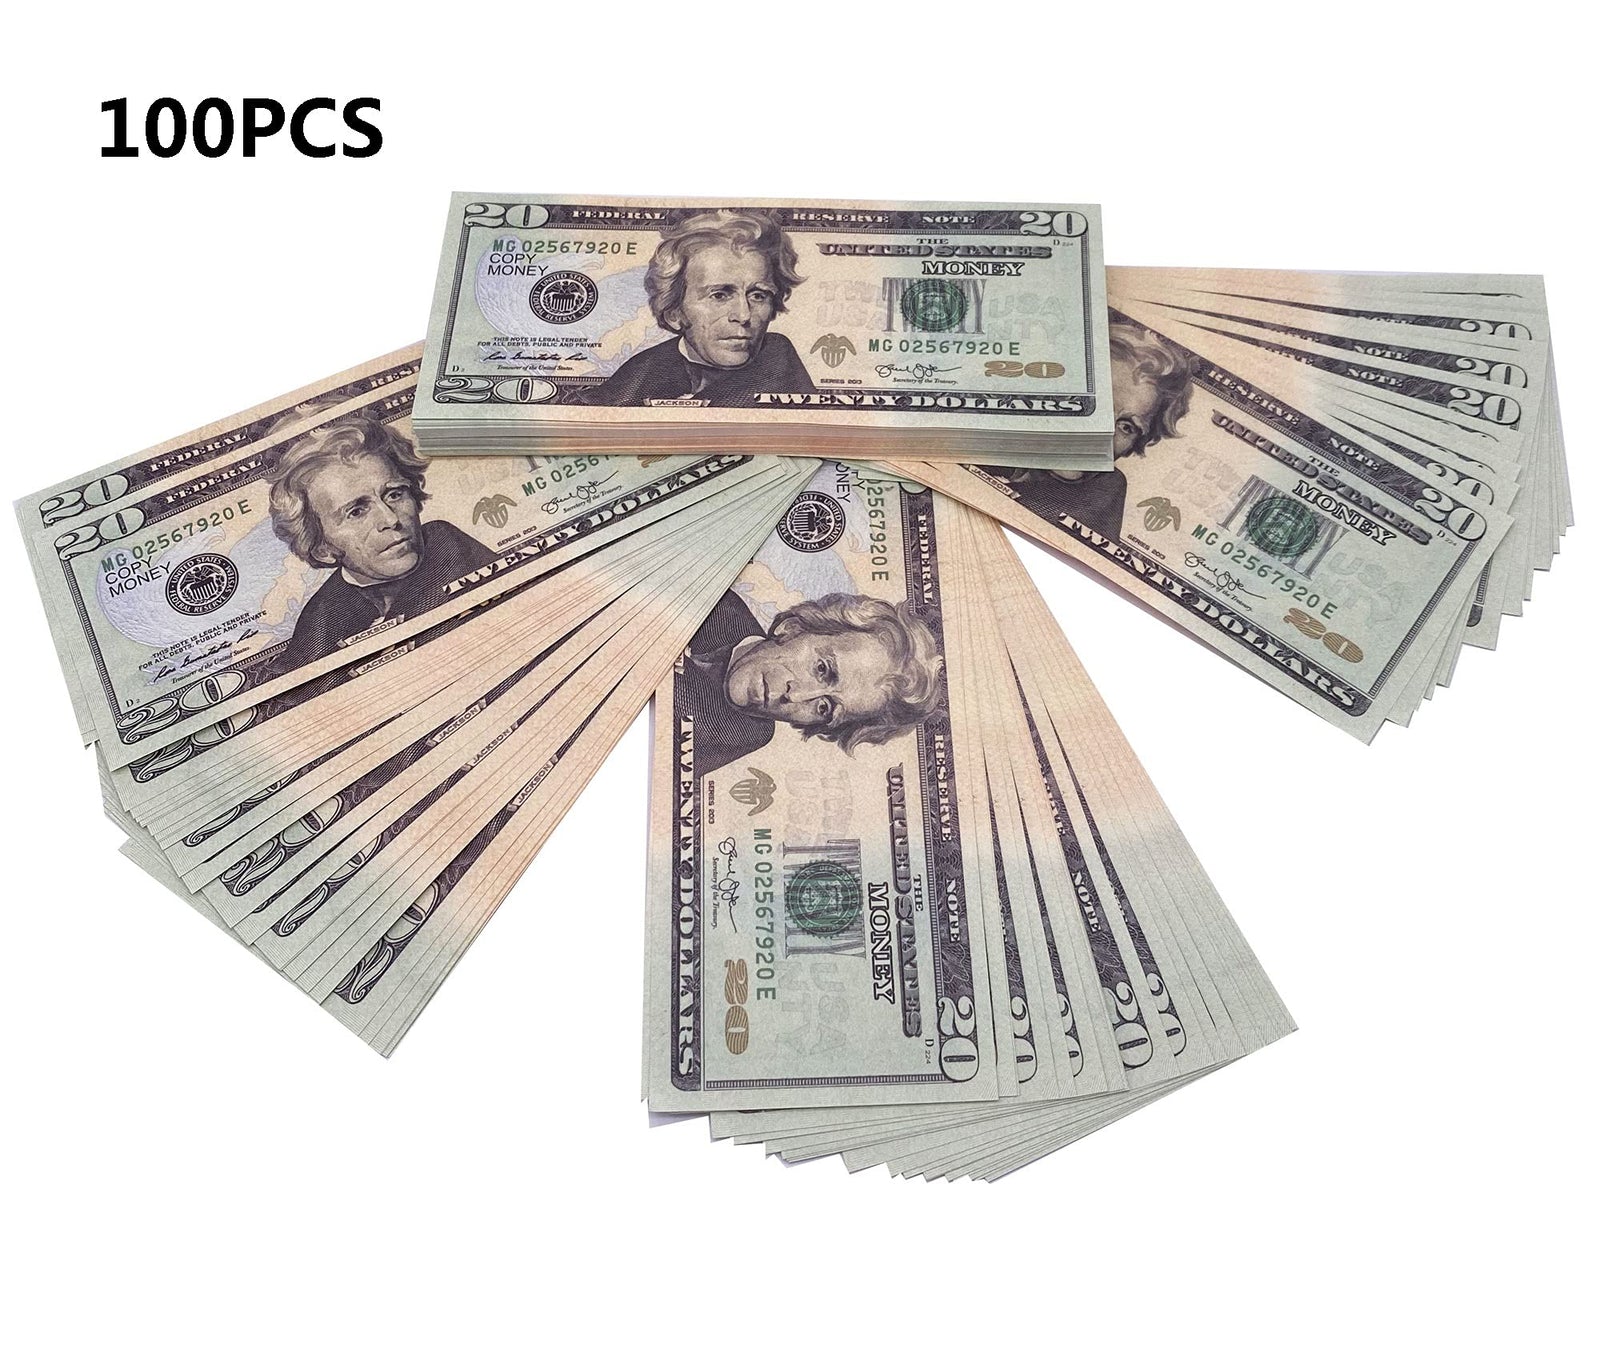 Ficheny Copy Money Full Print 2 Sides,Prop Money 2000 Dollar Bills for Movies,TV,Music Videos